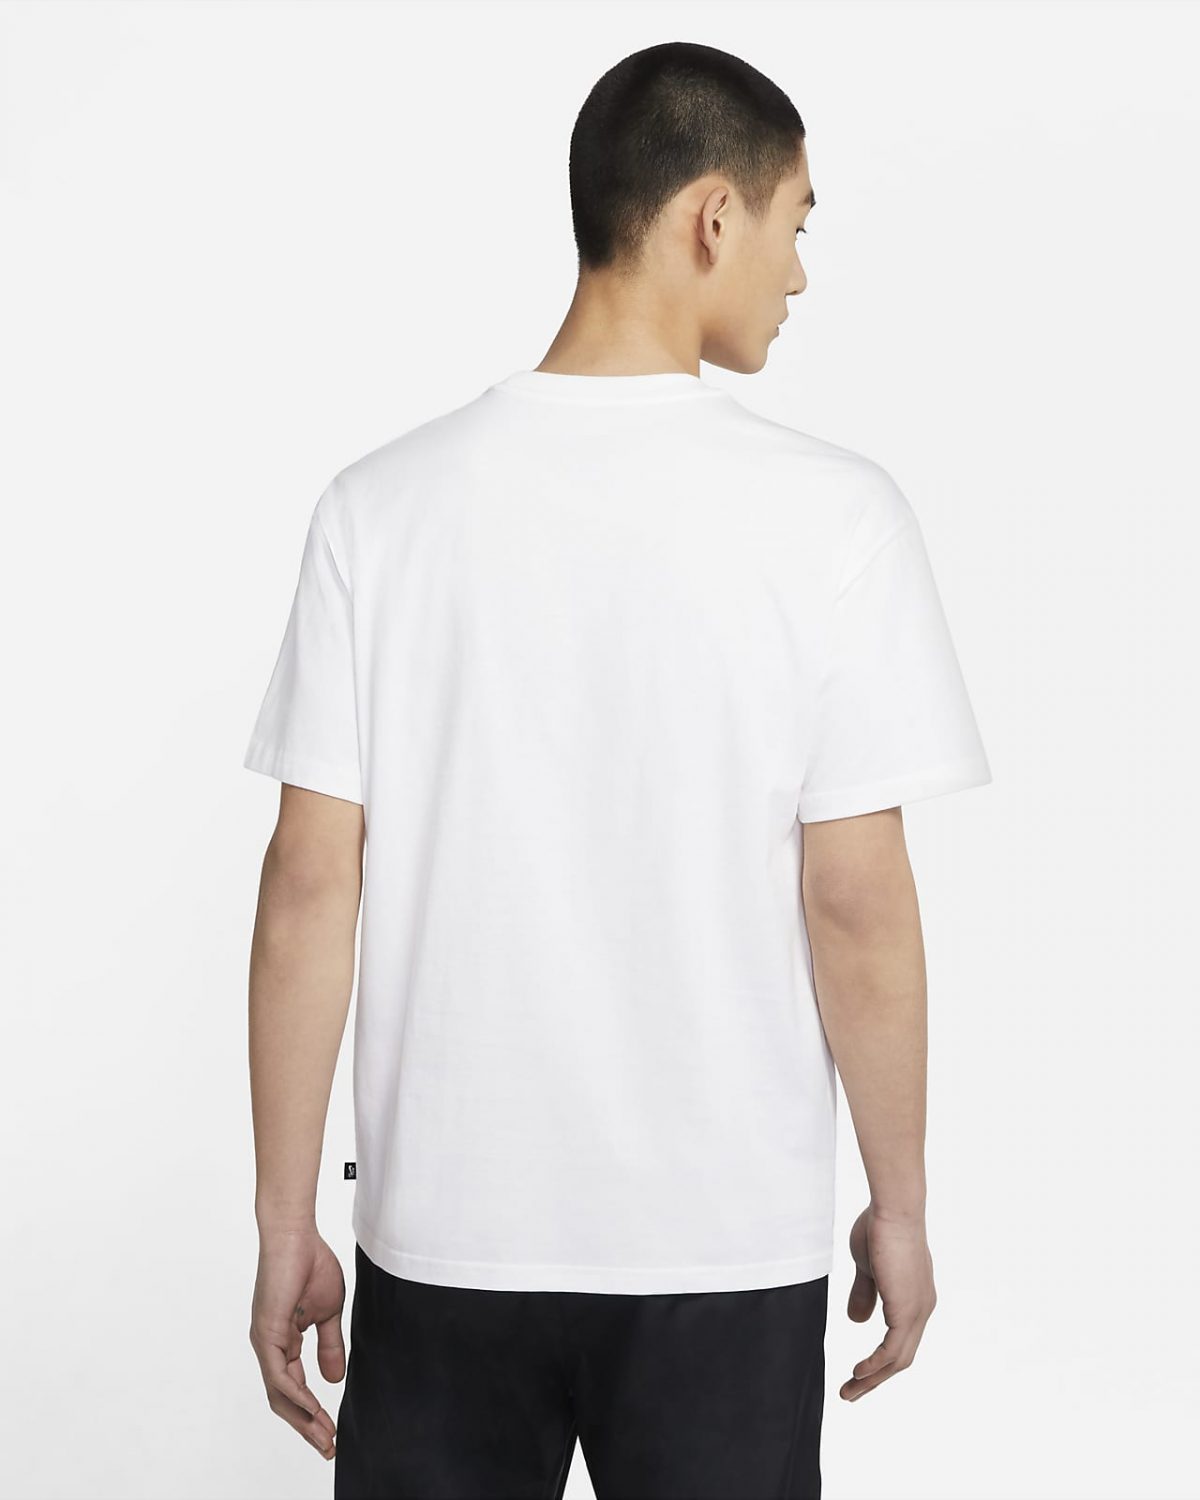 Мужская футболка Nike SB белая фотография